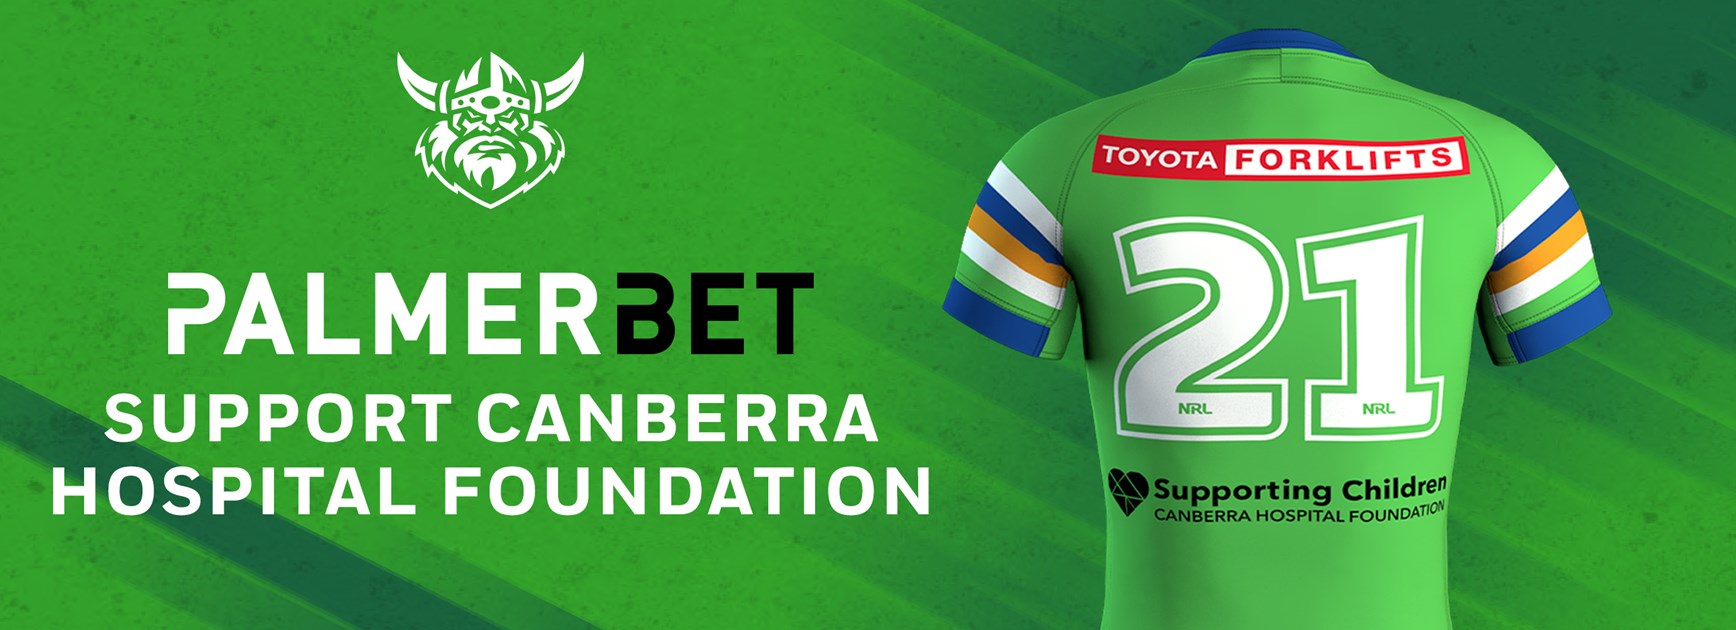 Palmerbet give up jersey branding position for sick kids (Canberra Hospital Foundation)